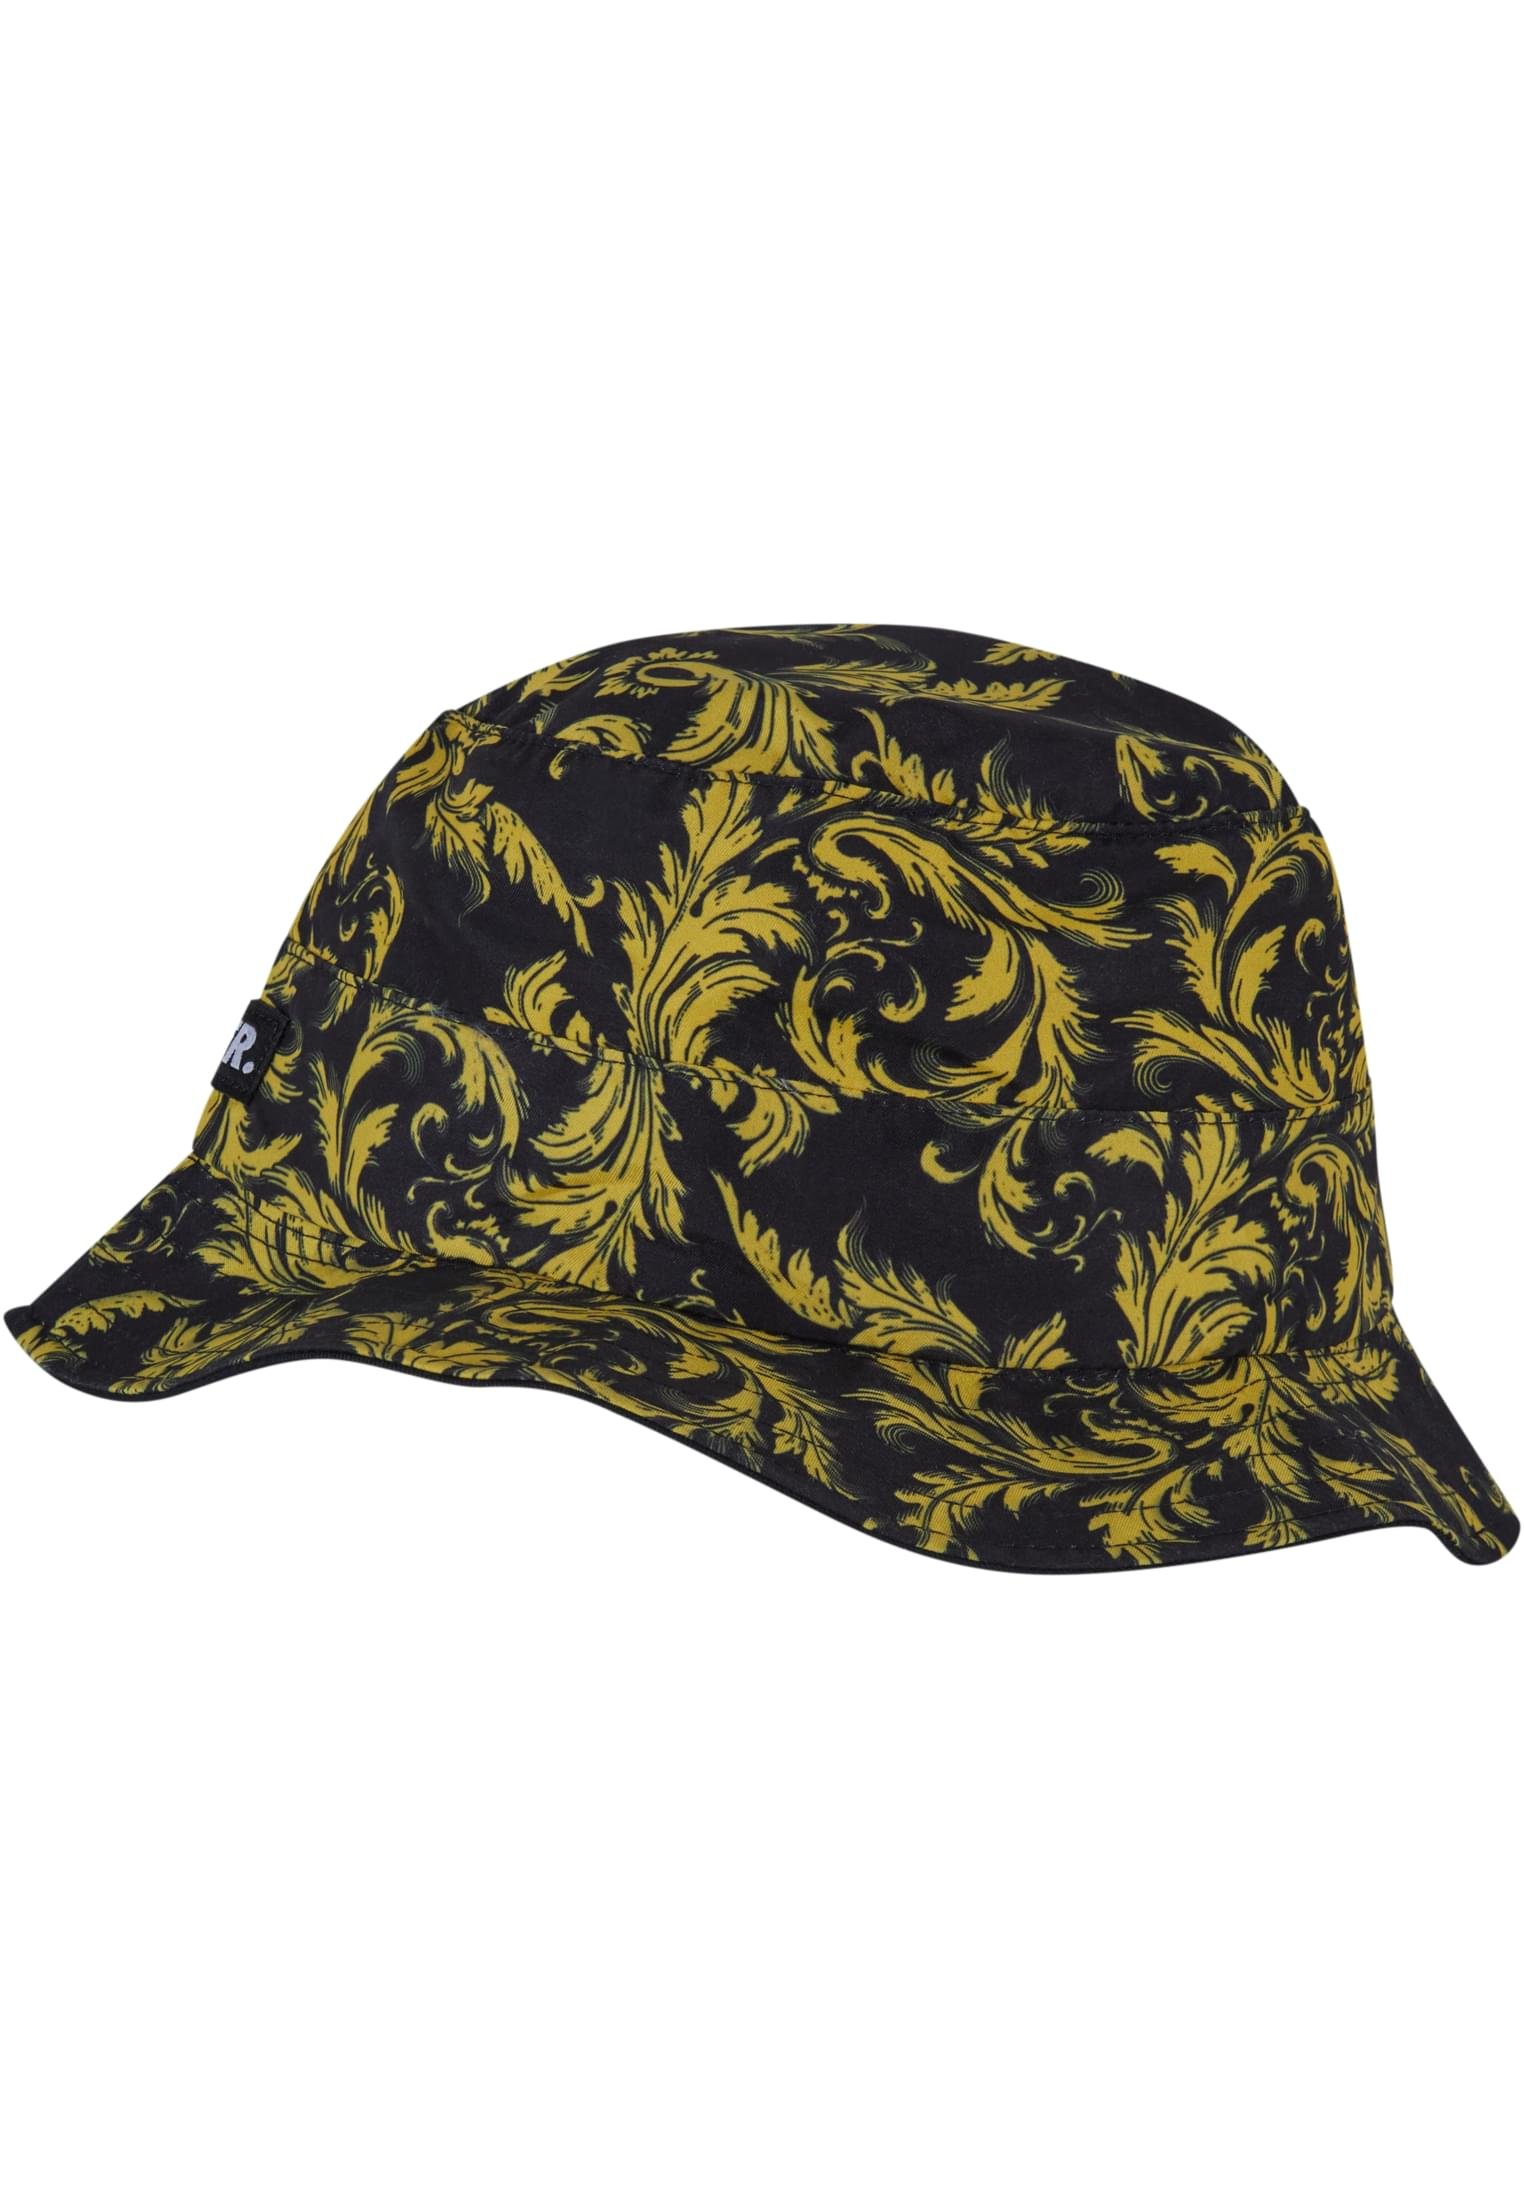 C&S WL Royal Leaves Bucket Hat black/mc one size